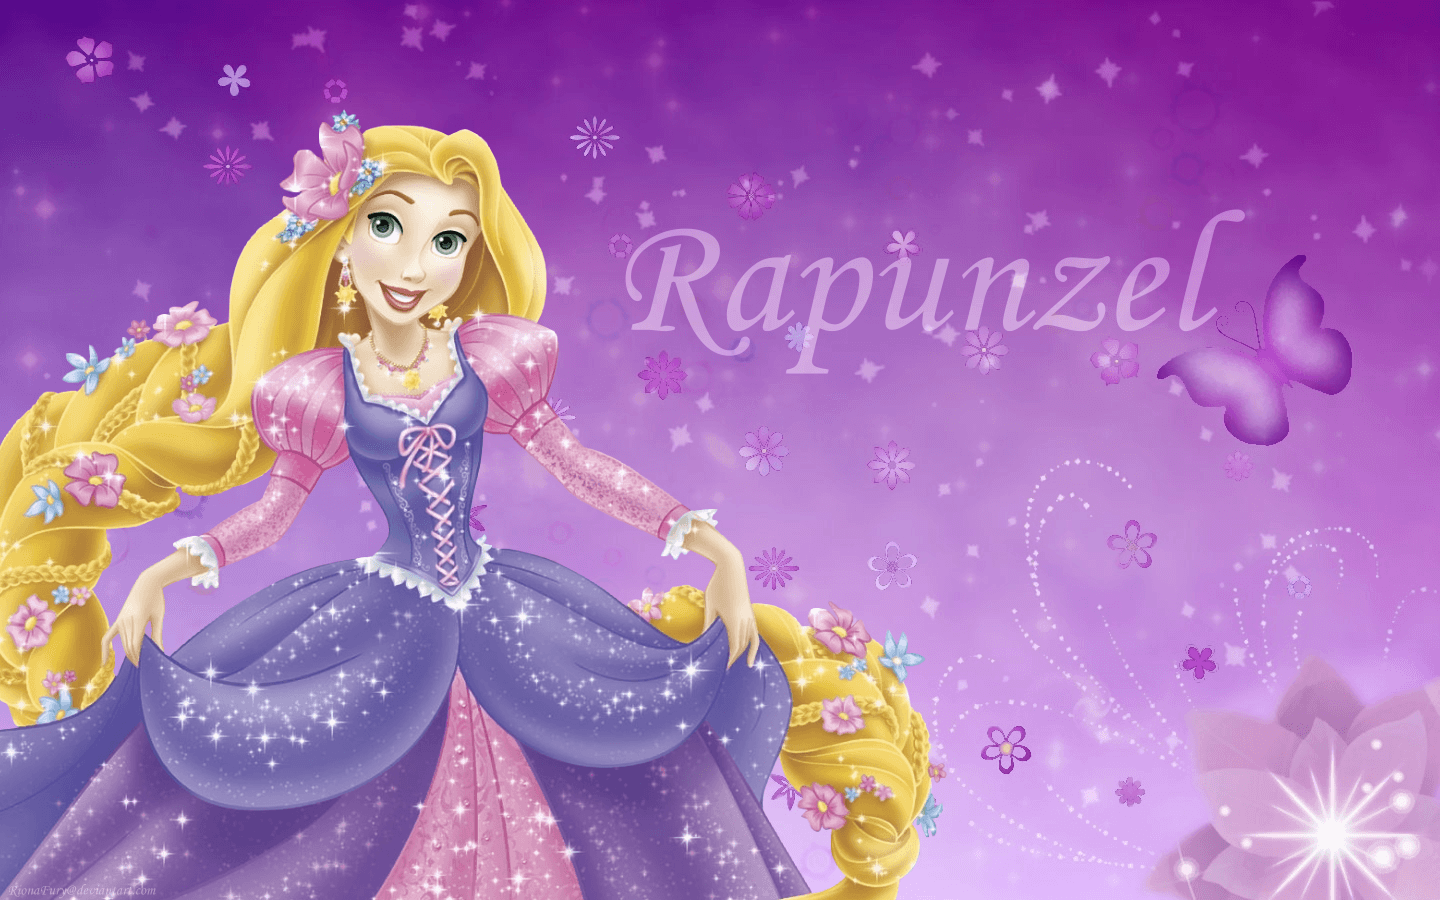 Tangled image Disney Princess Rapunzel HD wallpaper and background